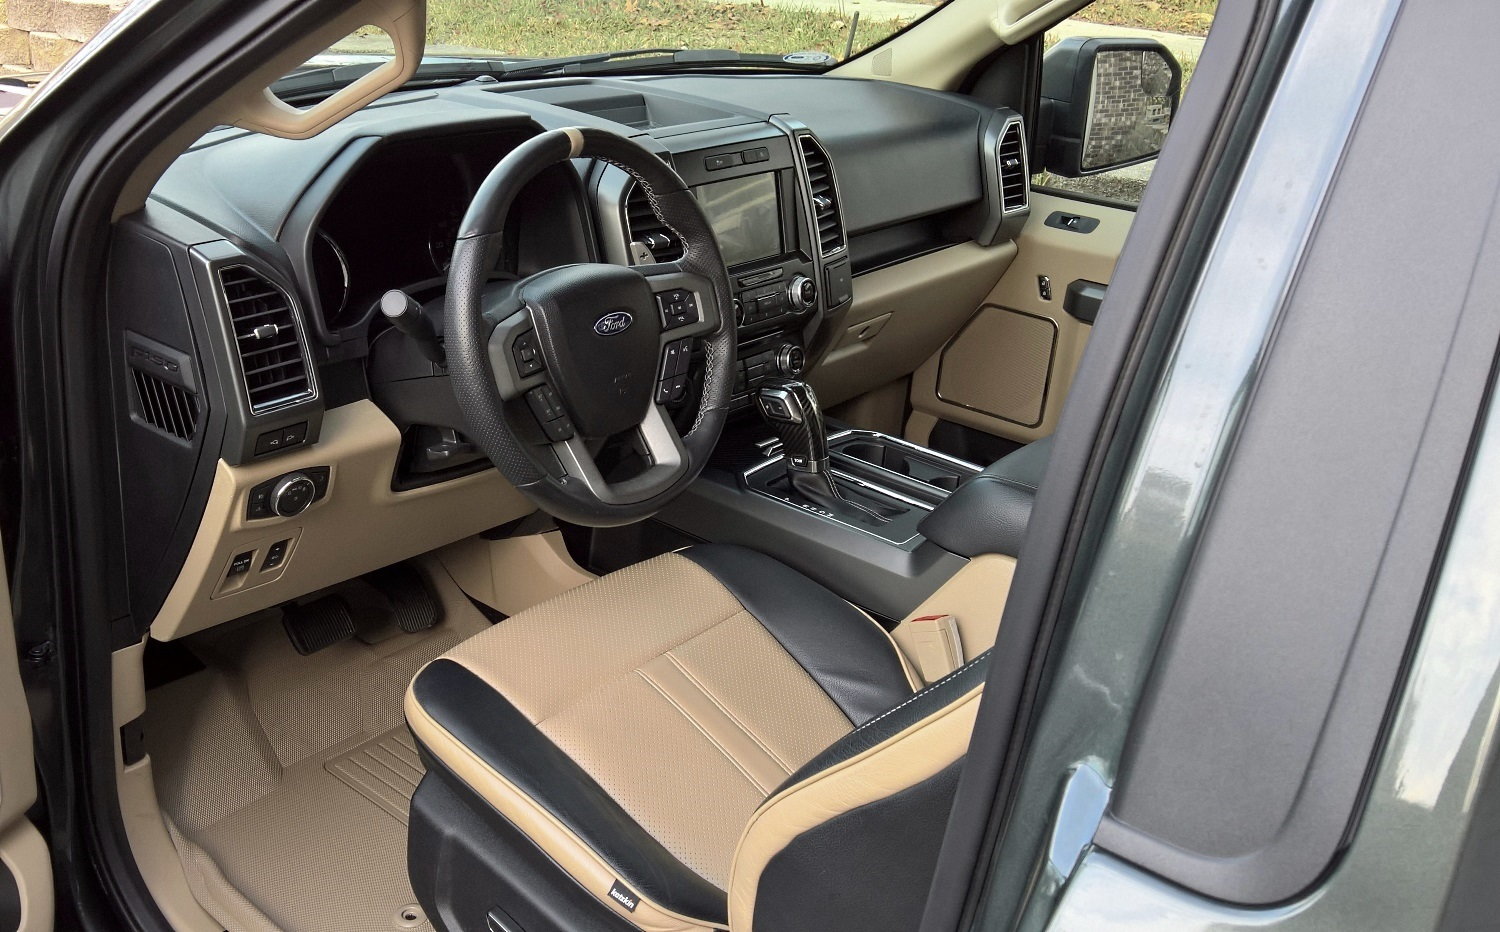 Posts Tagged: Ford Truck F-150 Interior Detail Carpet Shampoo